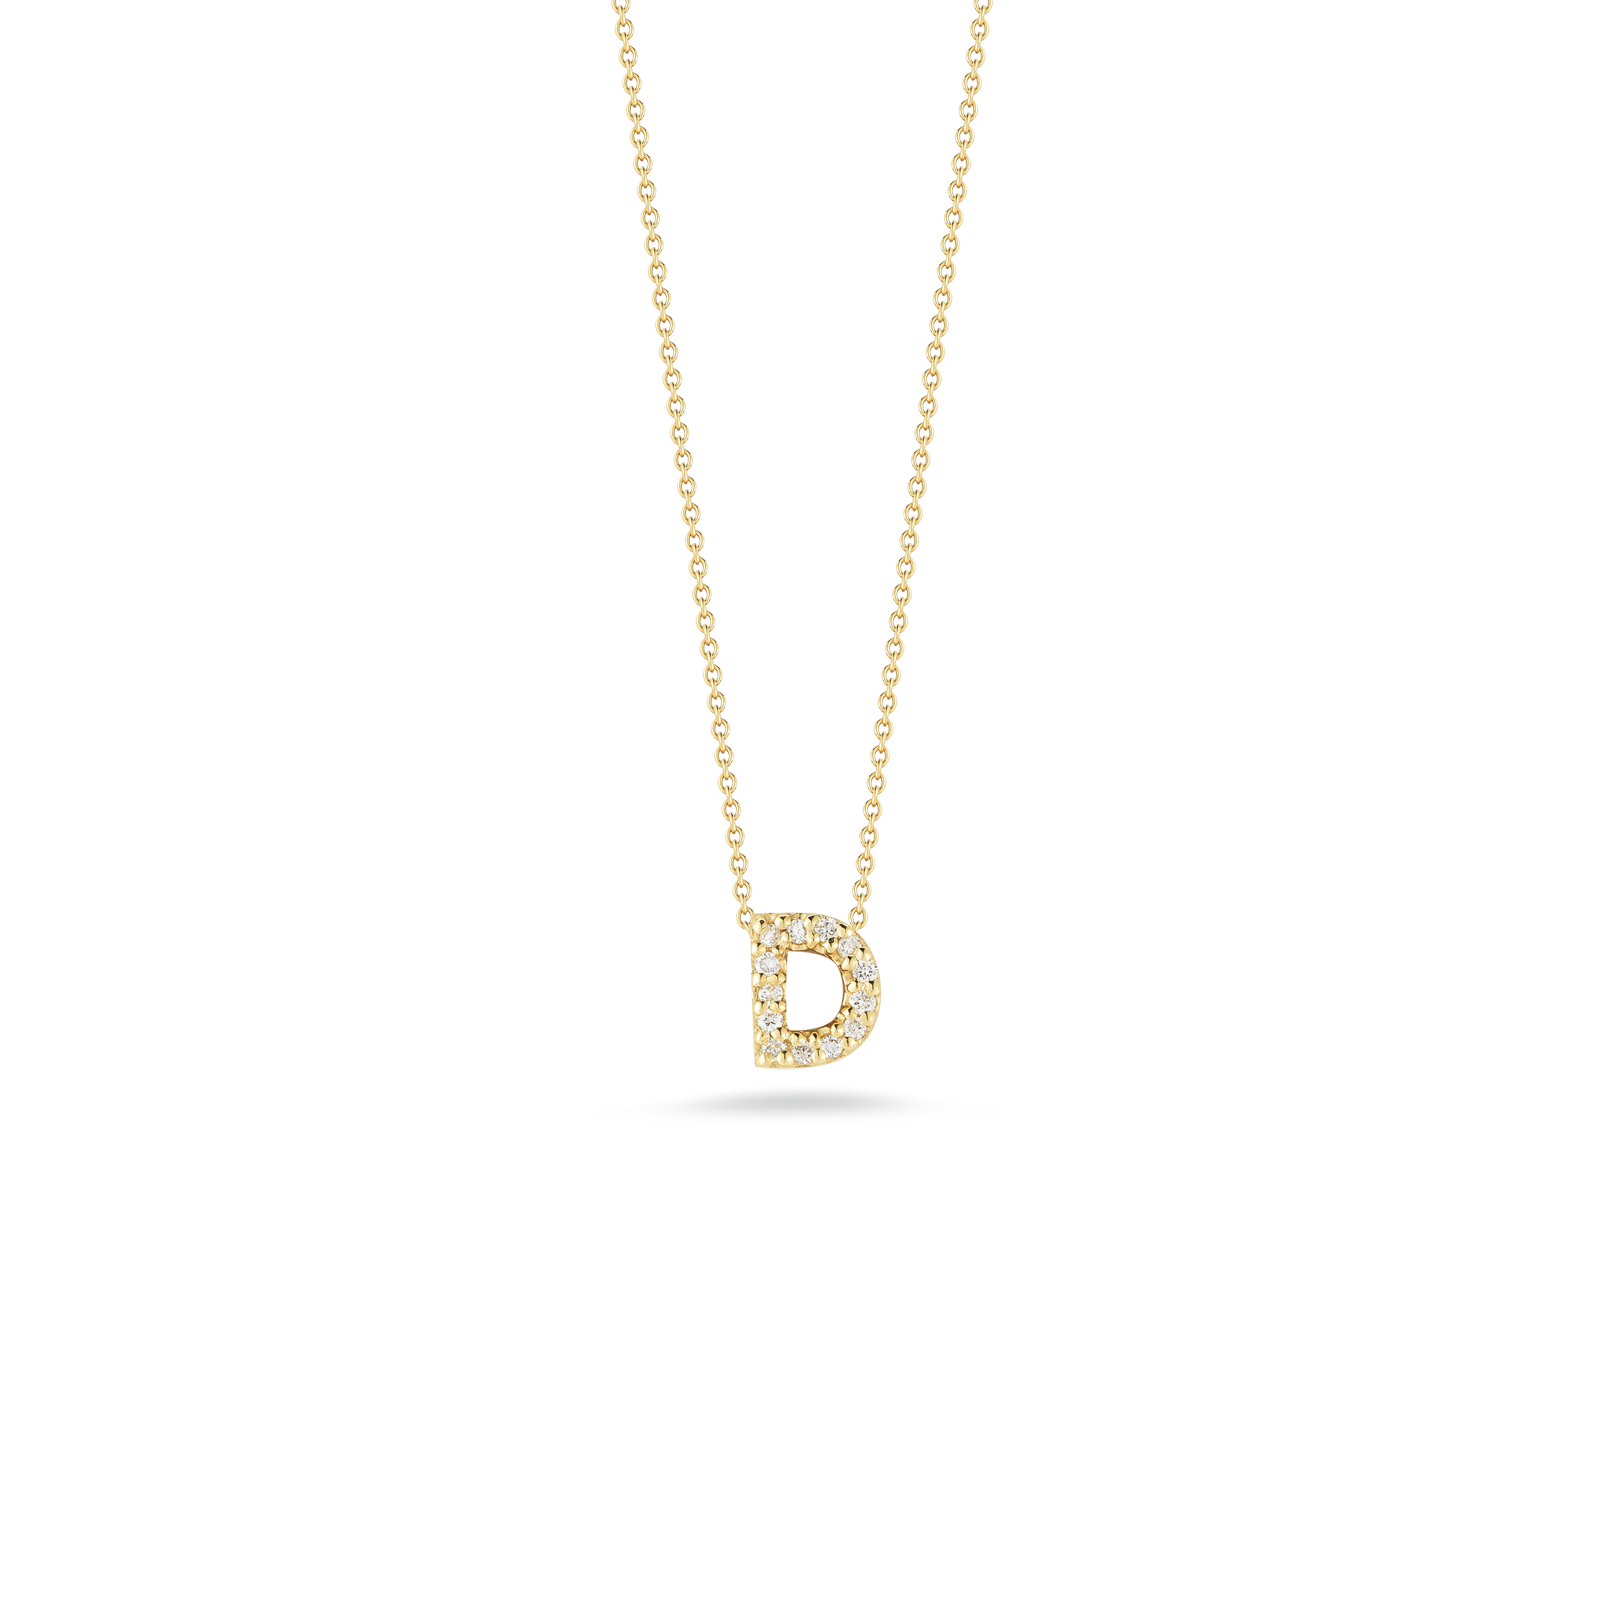 Roberto Coin 18K Diamond Love Letter Necklace "D"